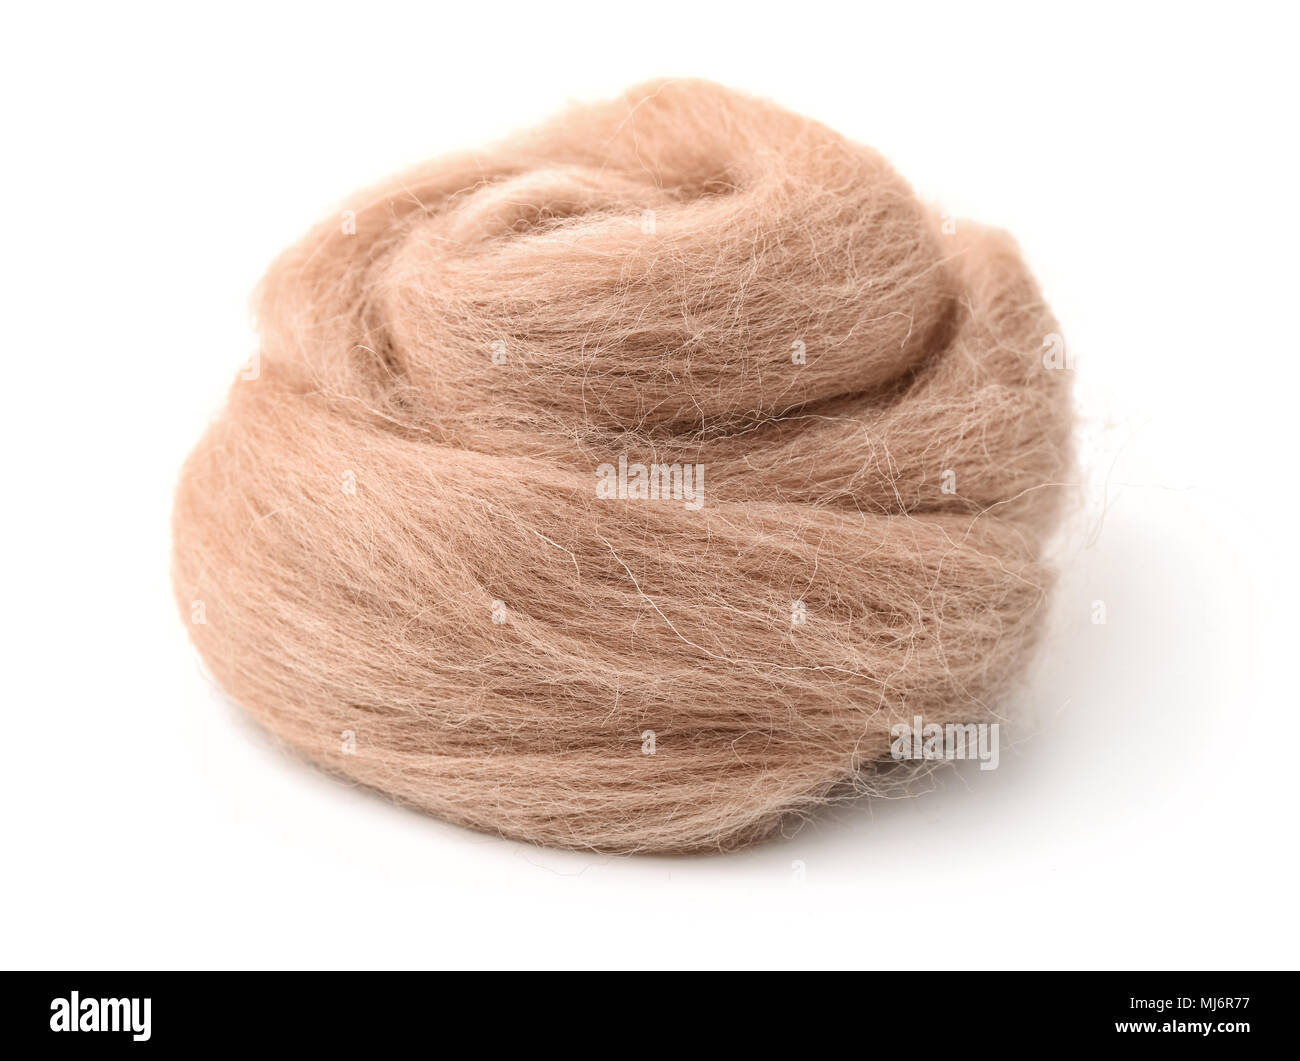 Hank of beige wool yarn isolated on white Stock Photo